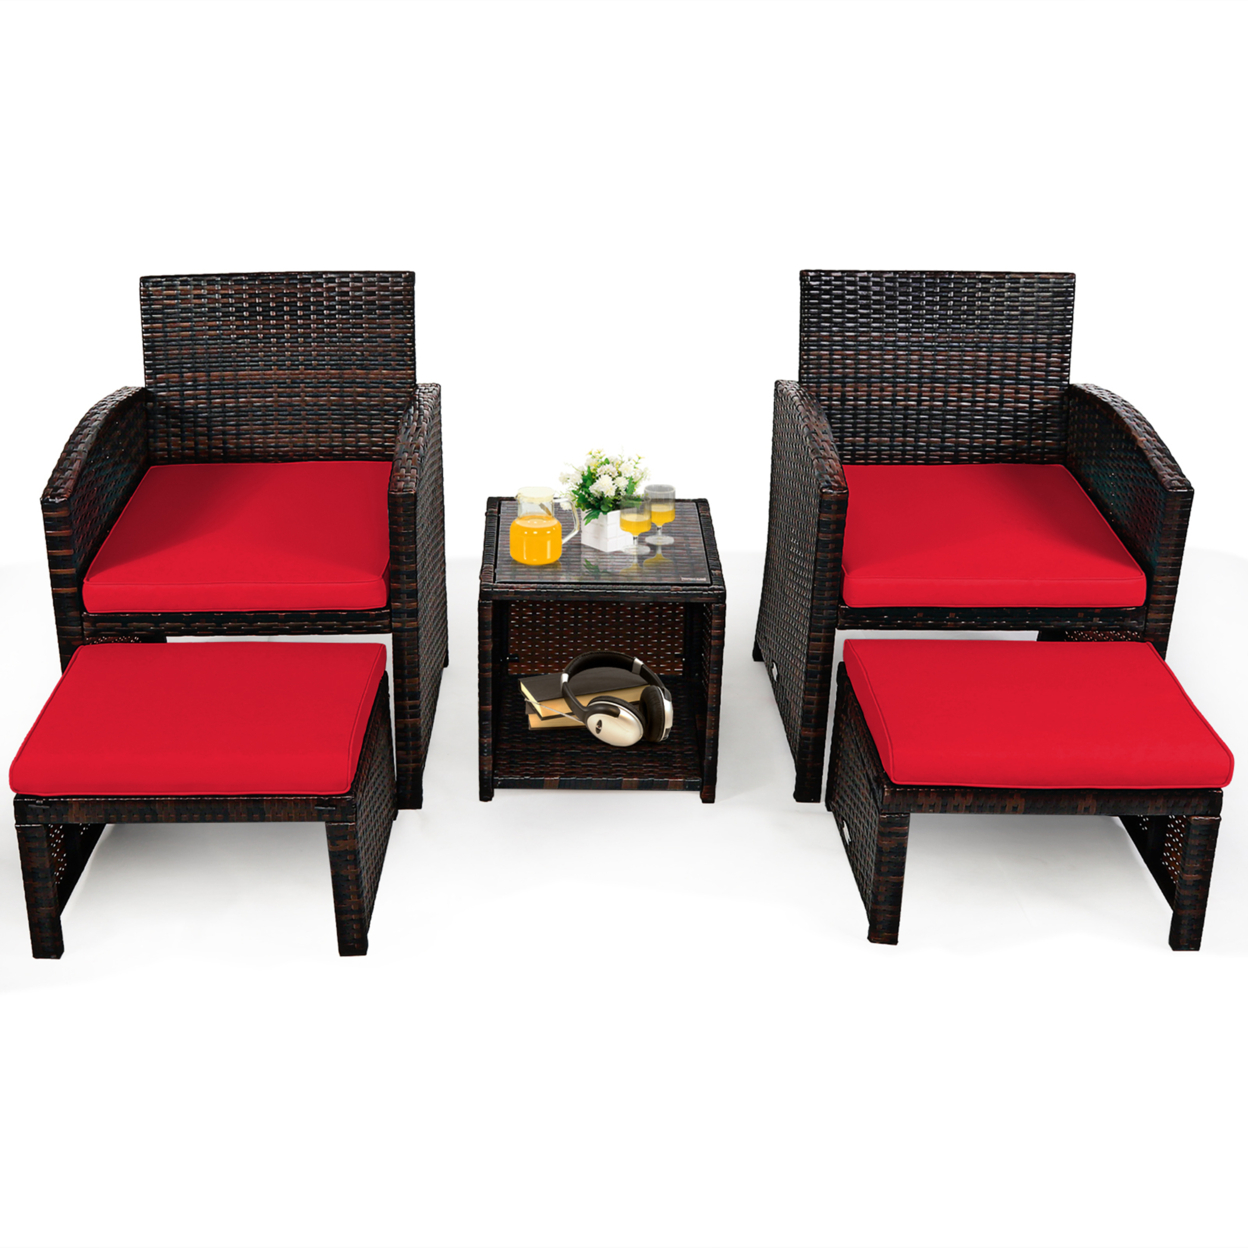 5PCS Rattan Patio Furniture Set Chair & Ottoman Set W/ Red Cushions